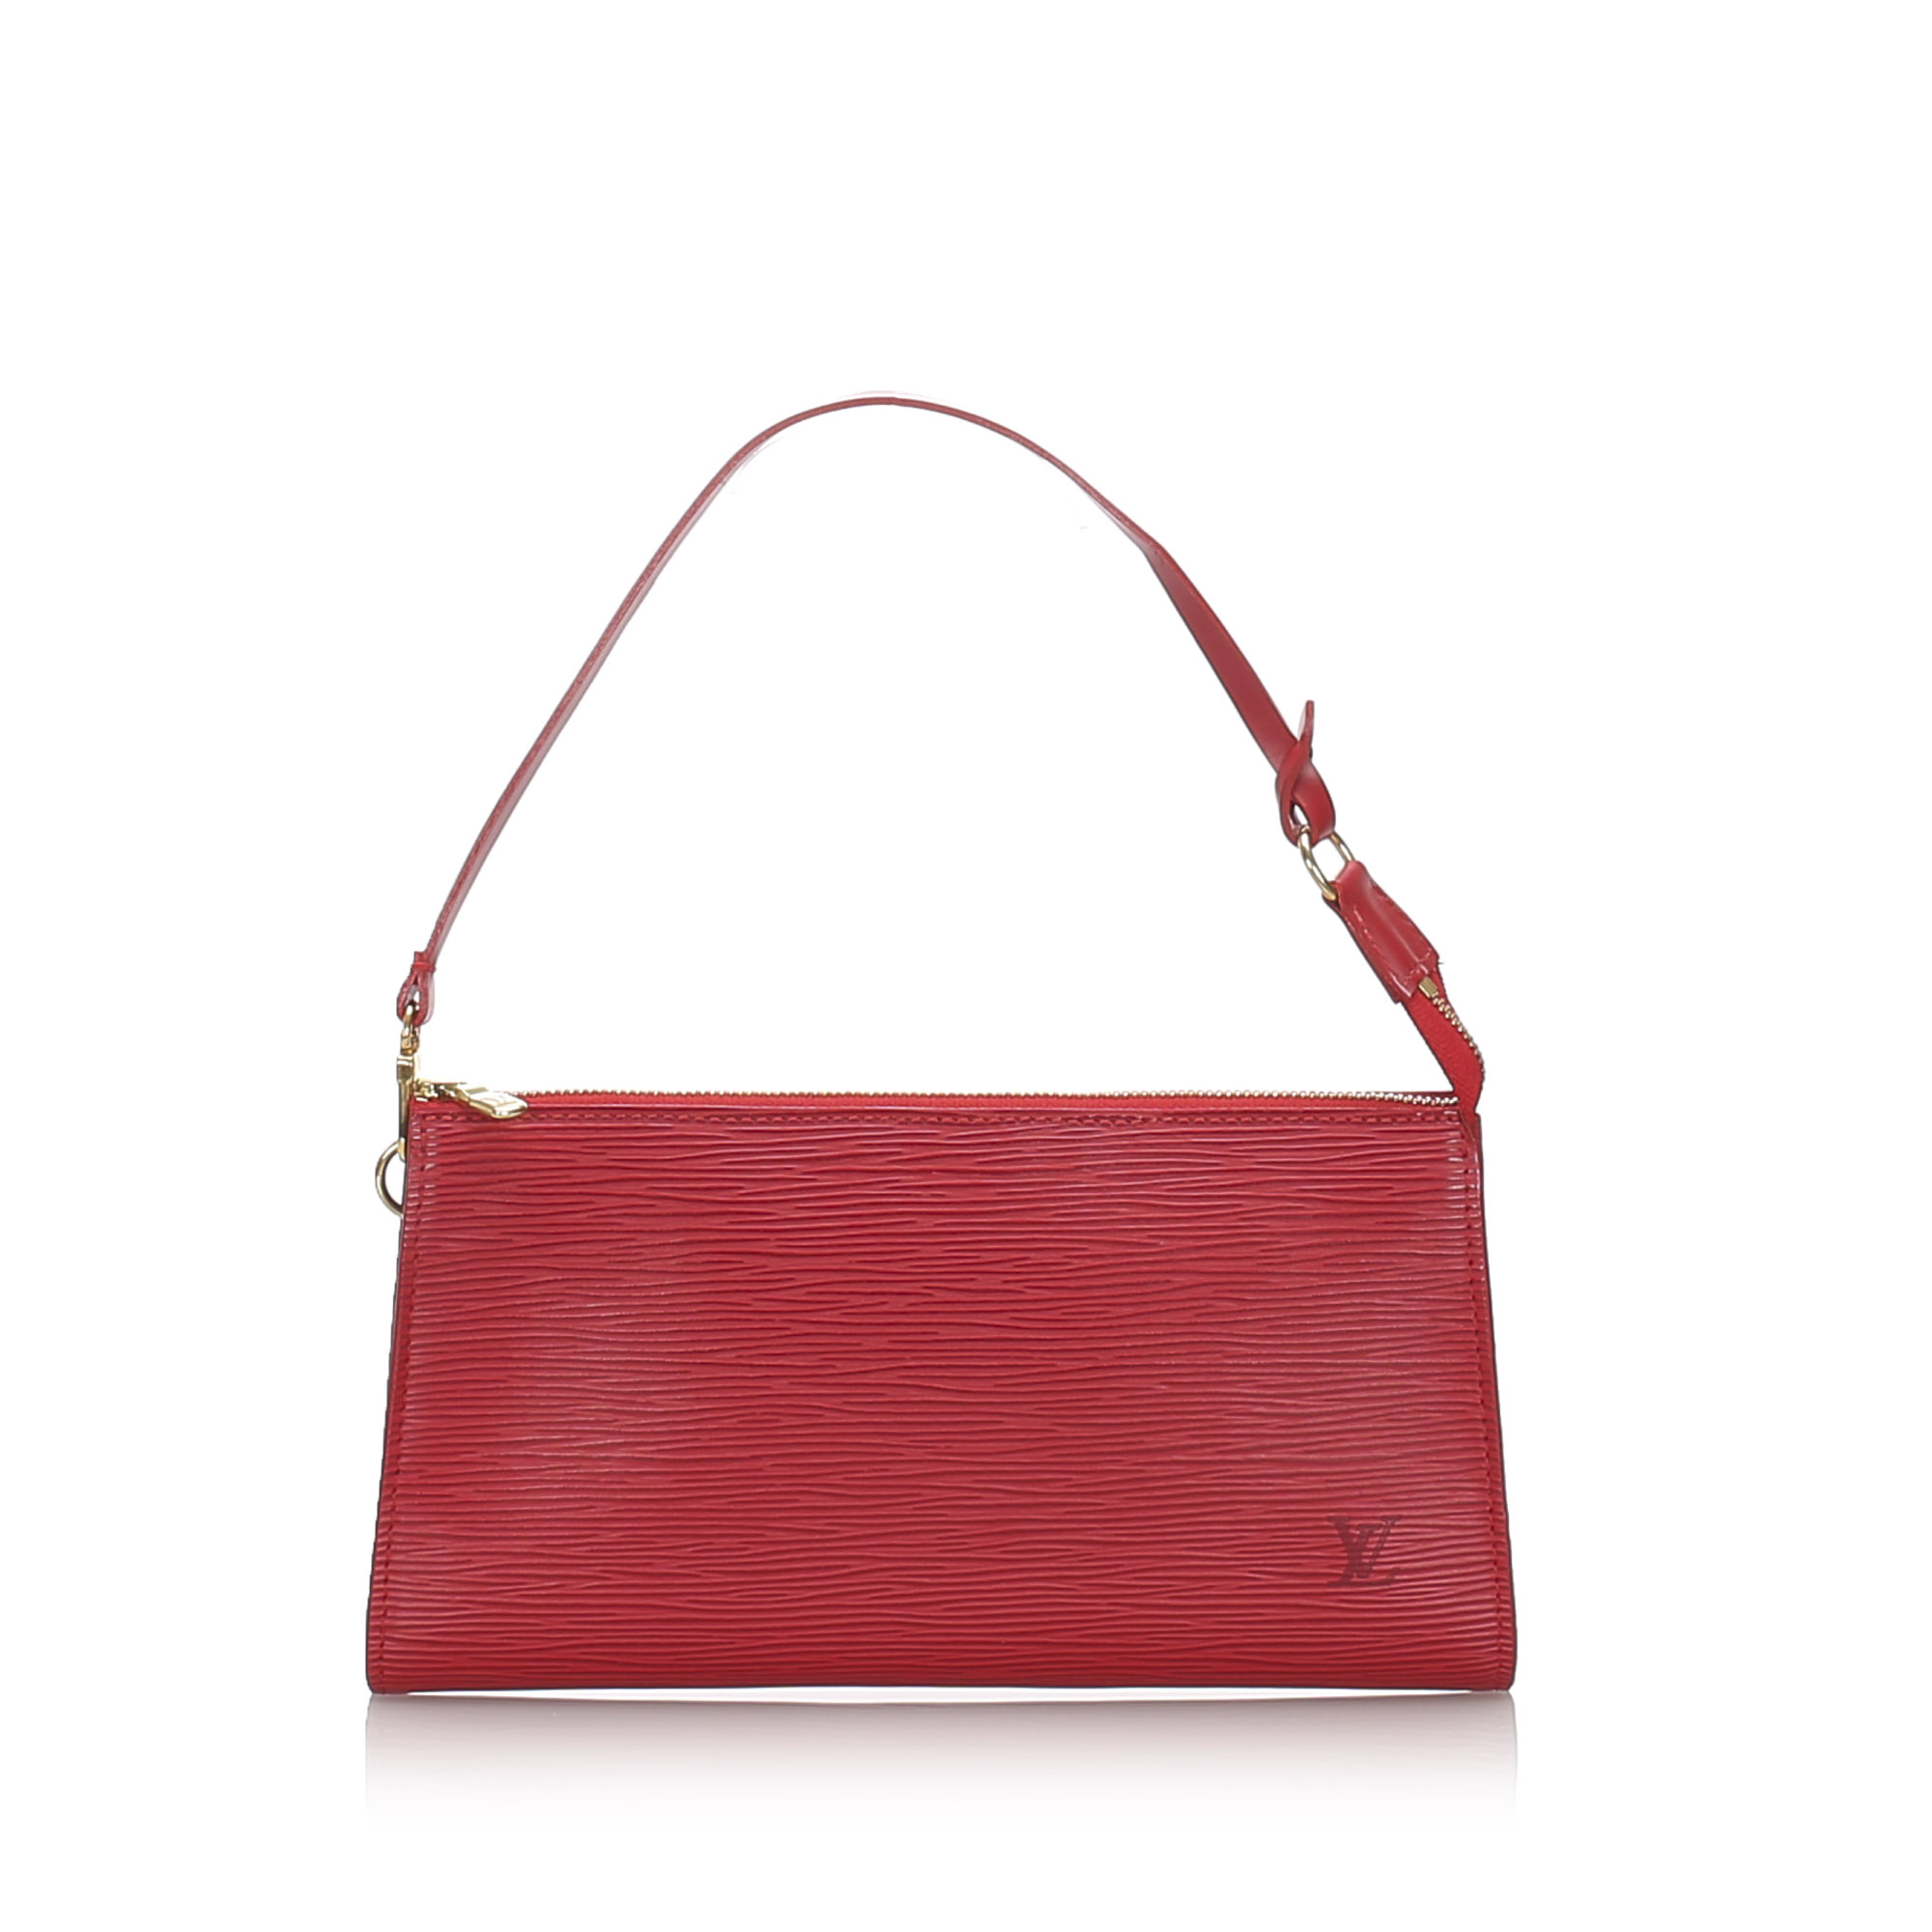 Pre-Loved Louis Vuitton Red Epi Leather Pochette Accessoires France | eBay